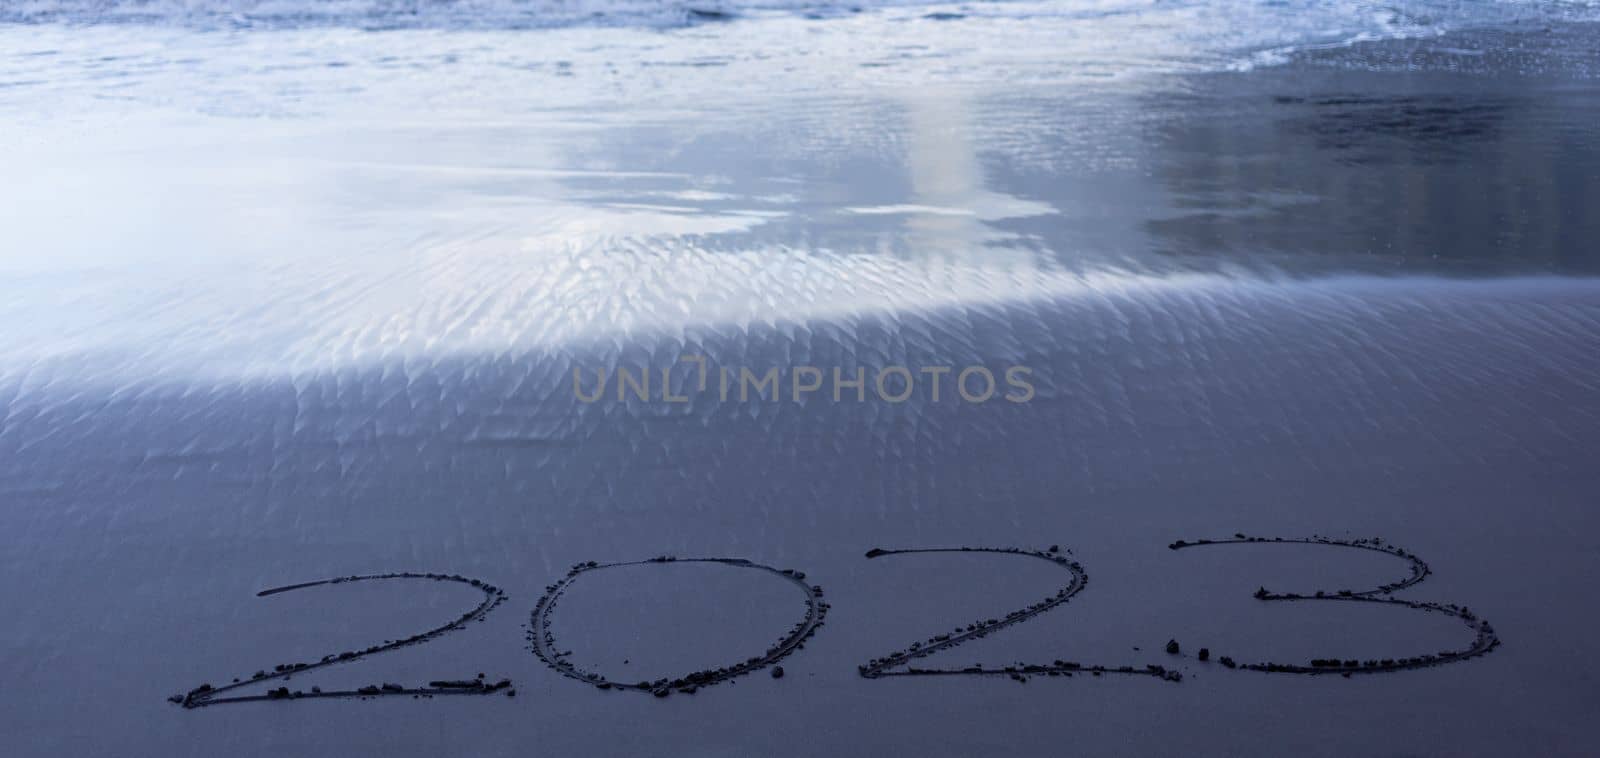 Year 2023 symbol written on black beach sand by Chechotkin